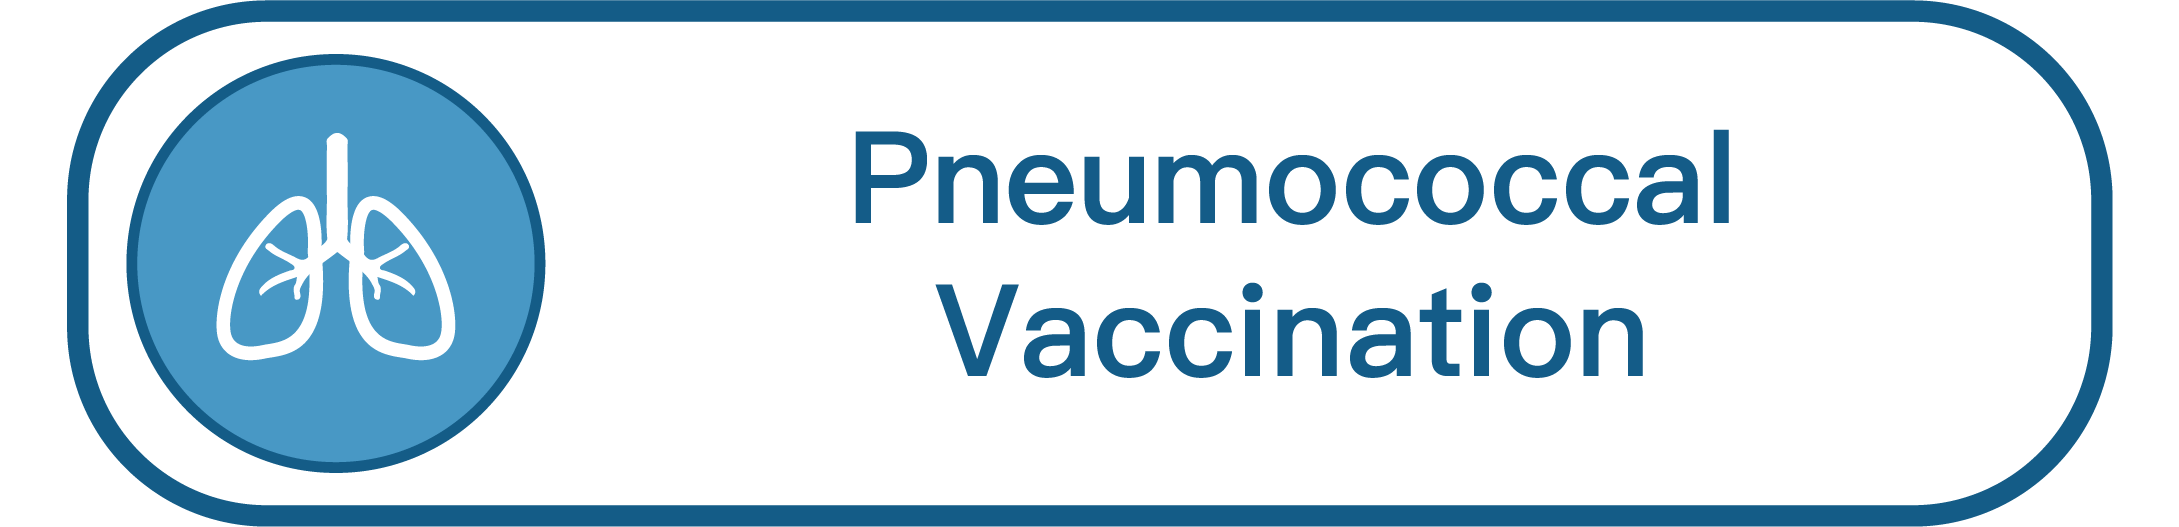 Pneumococcal Vaccination